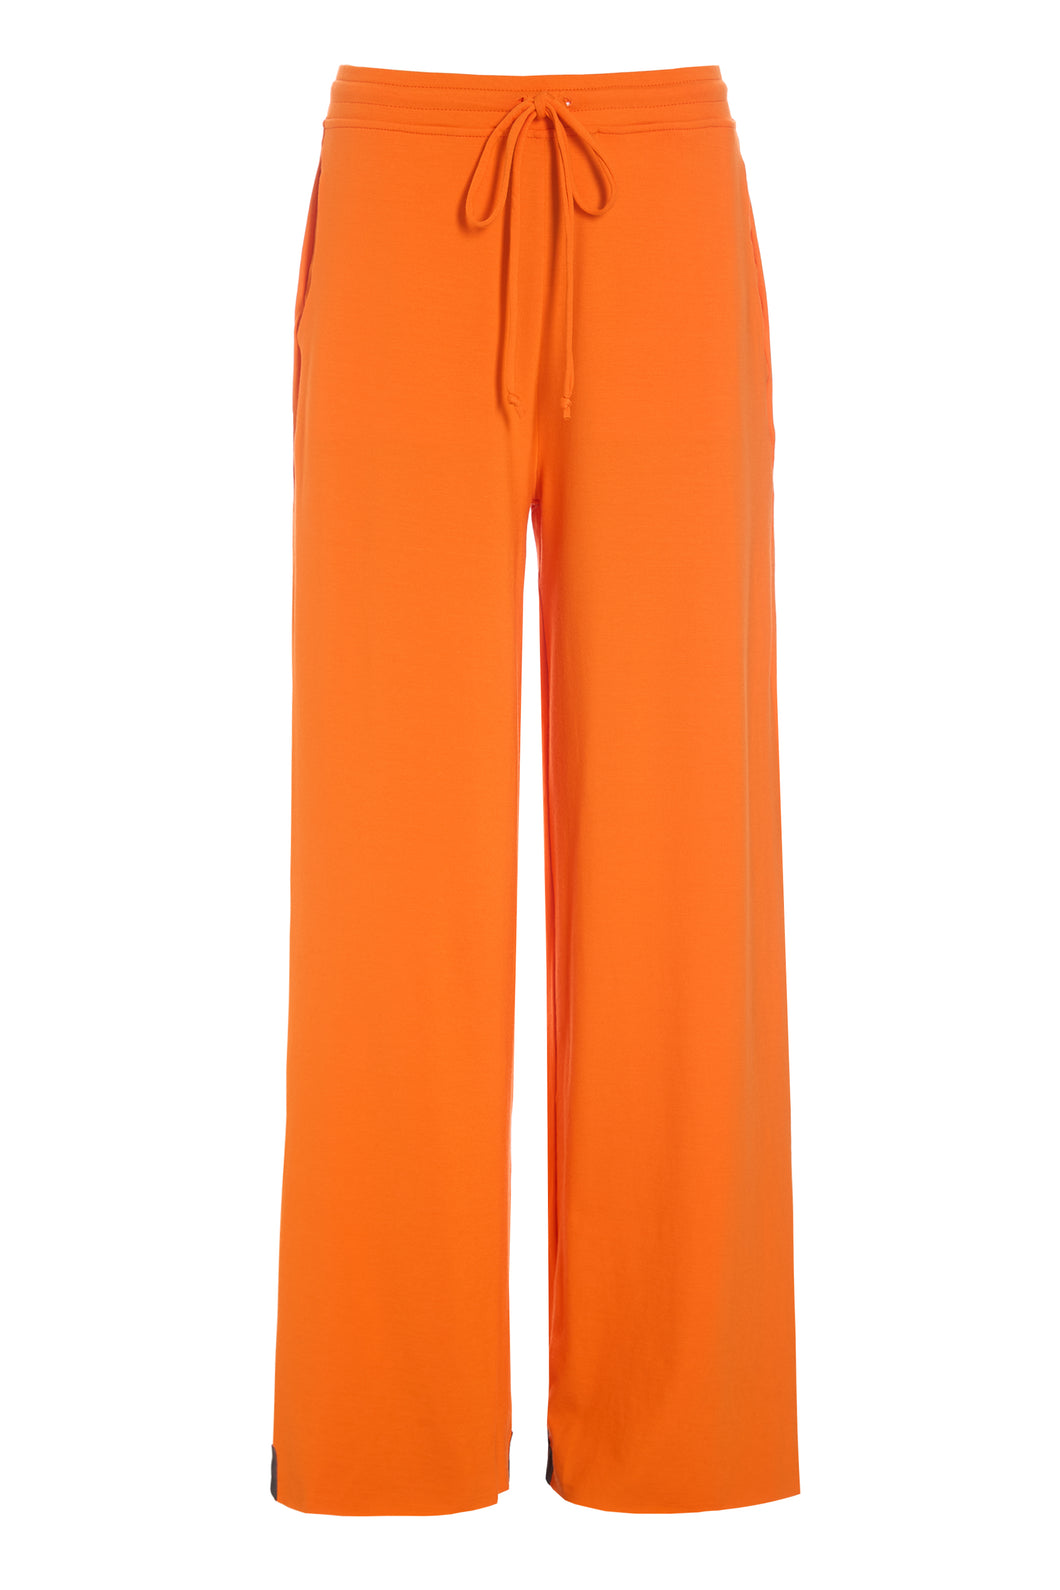 HENRIETTE STEFFENSEN Jersey Trousers (99013)